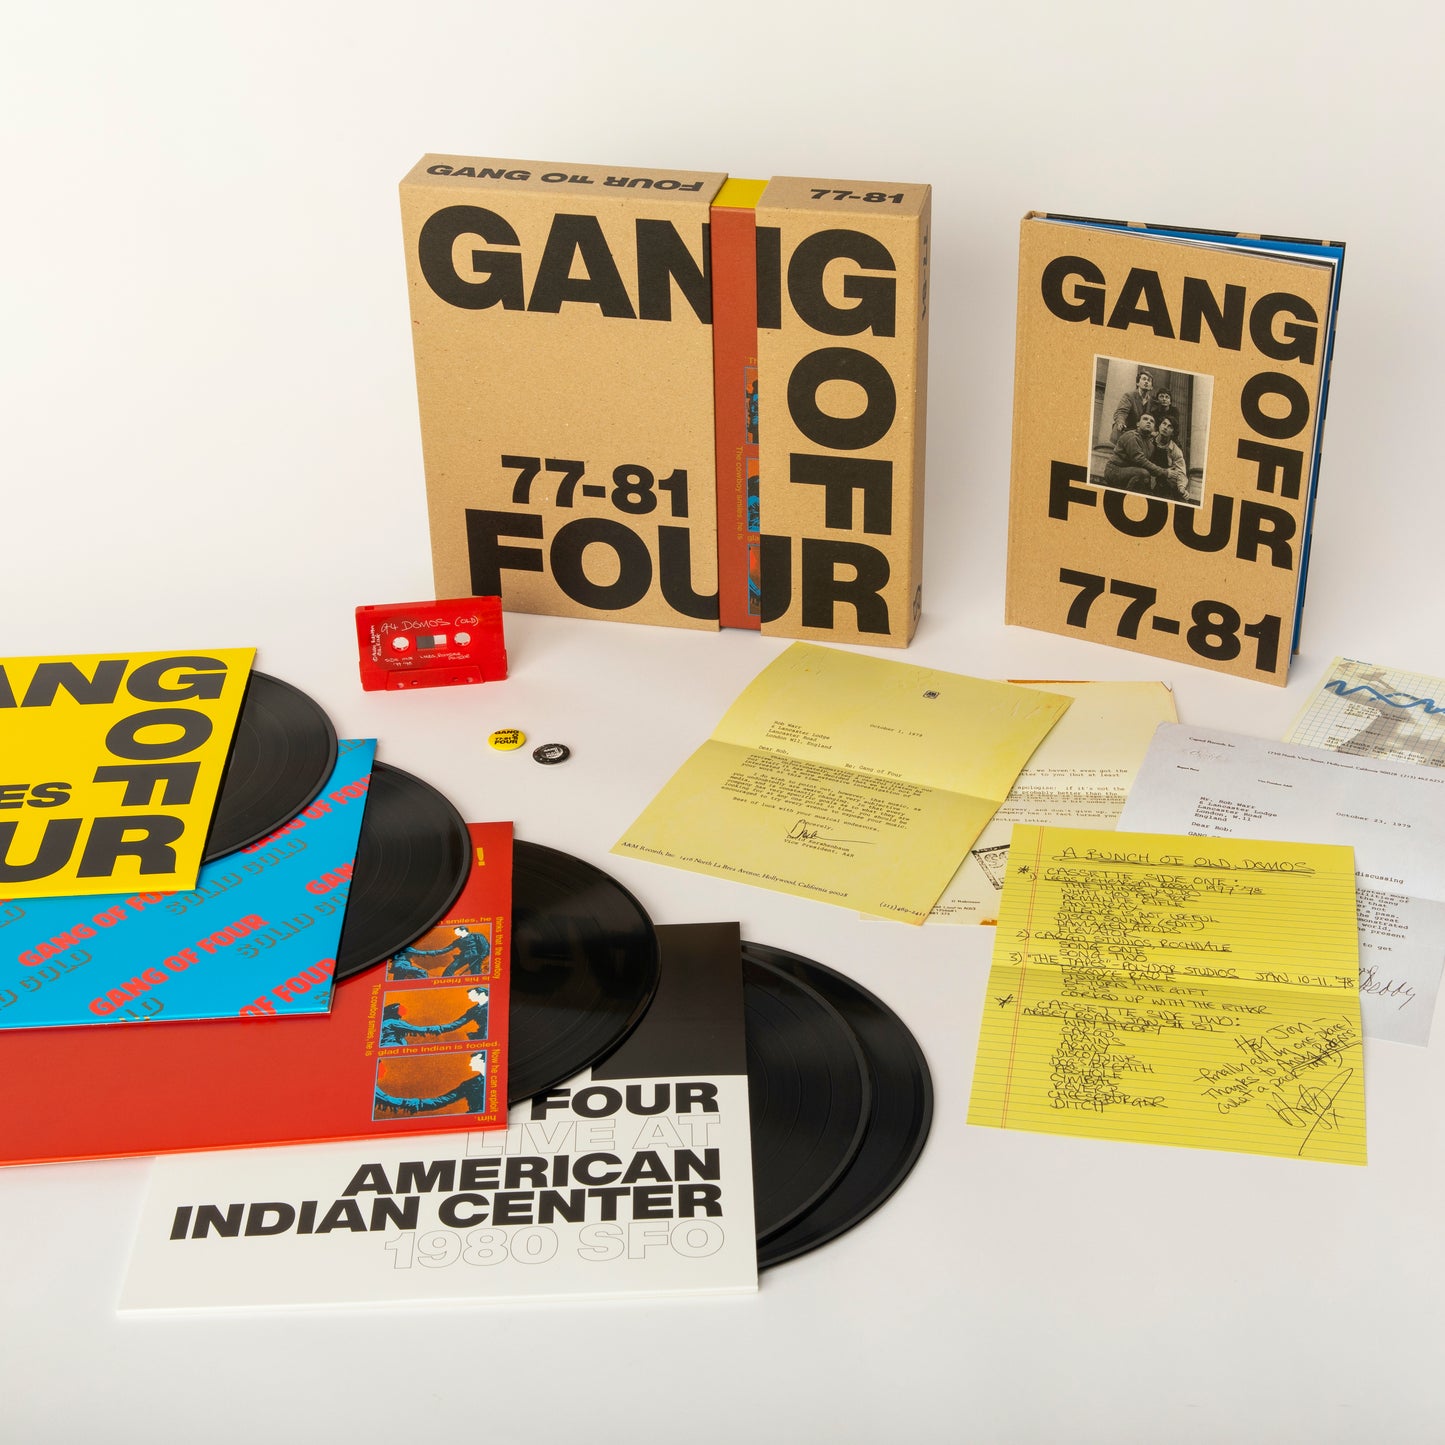 Gang of Four - 77-81 5LP + Book + Cassette